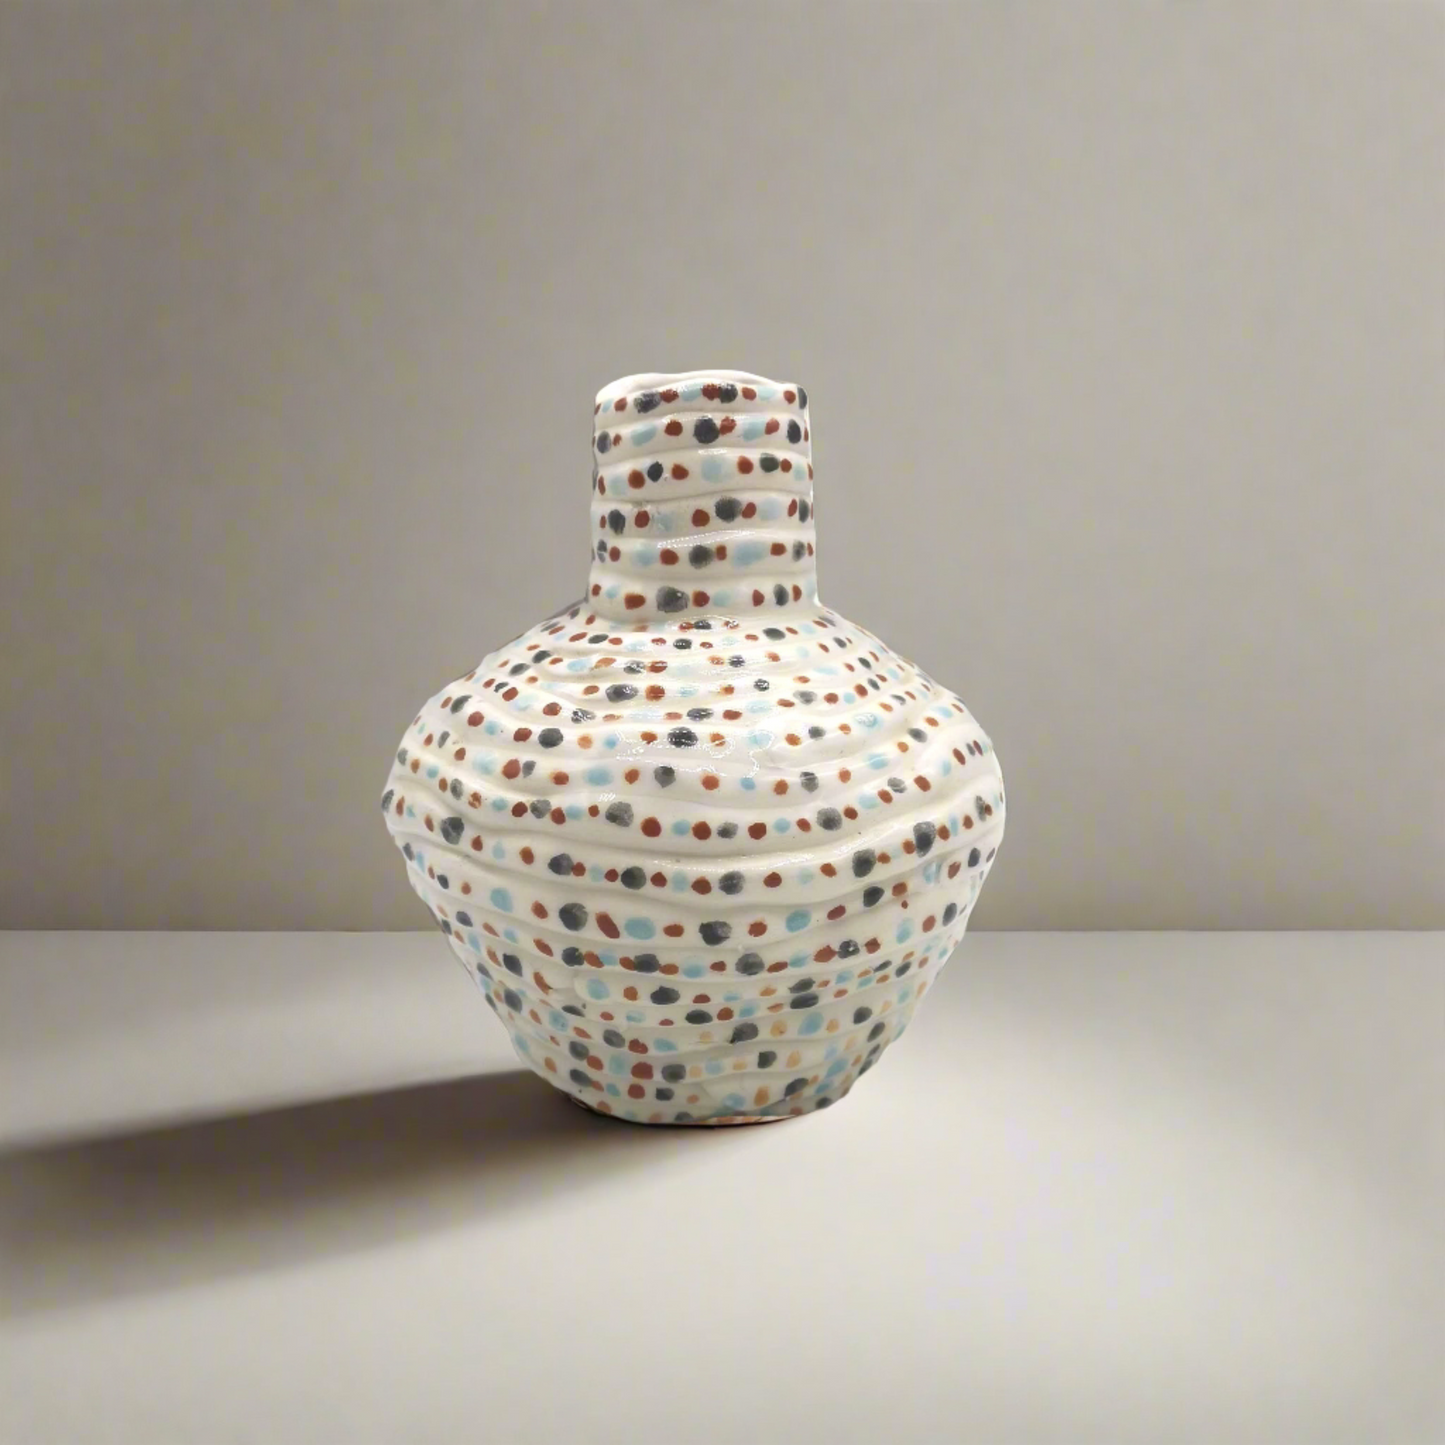 Handmade White Ceramic Vase with Colorful Handpainted Spots – Eclectic Decorative Vase for Home & Garden – Unique Gift Idea – 15cm x 12cm